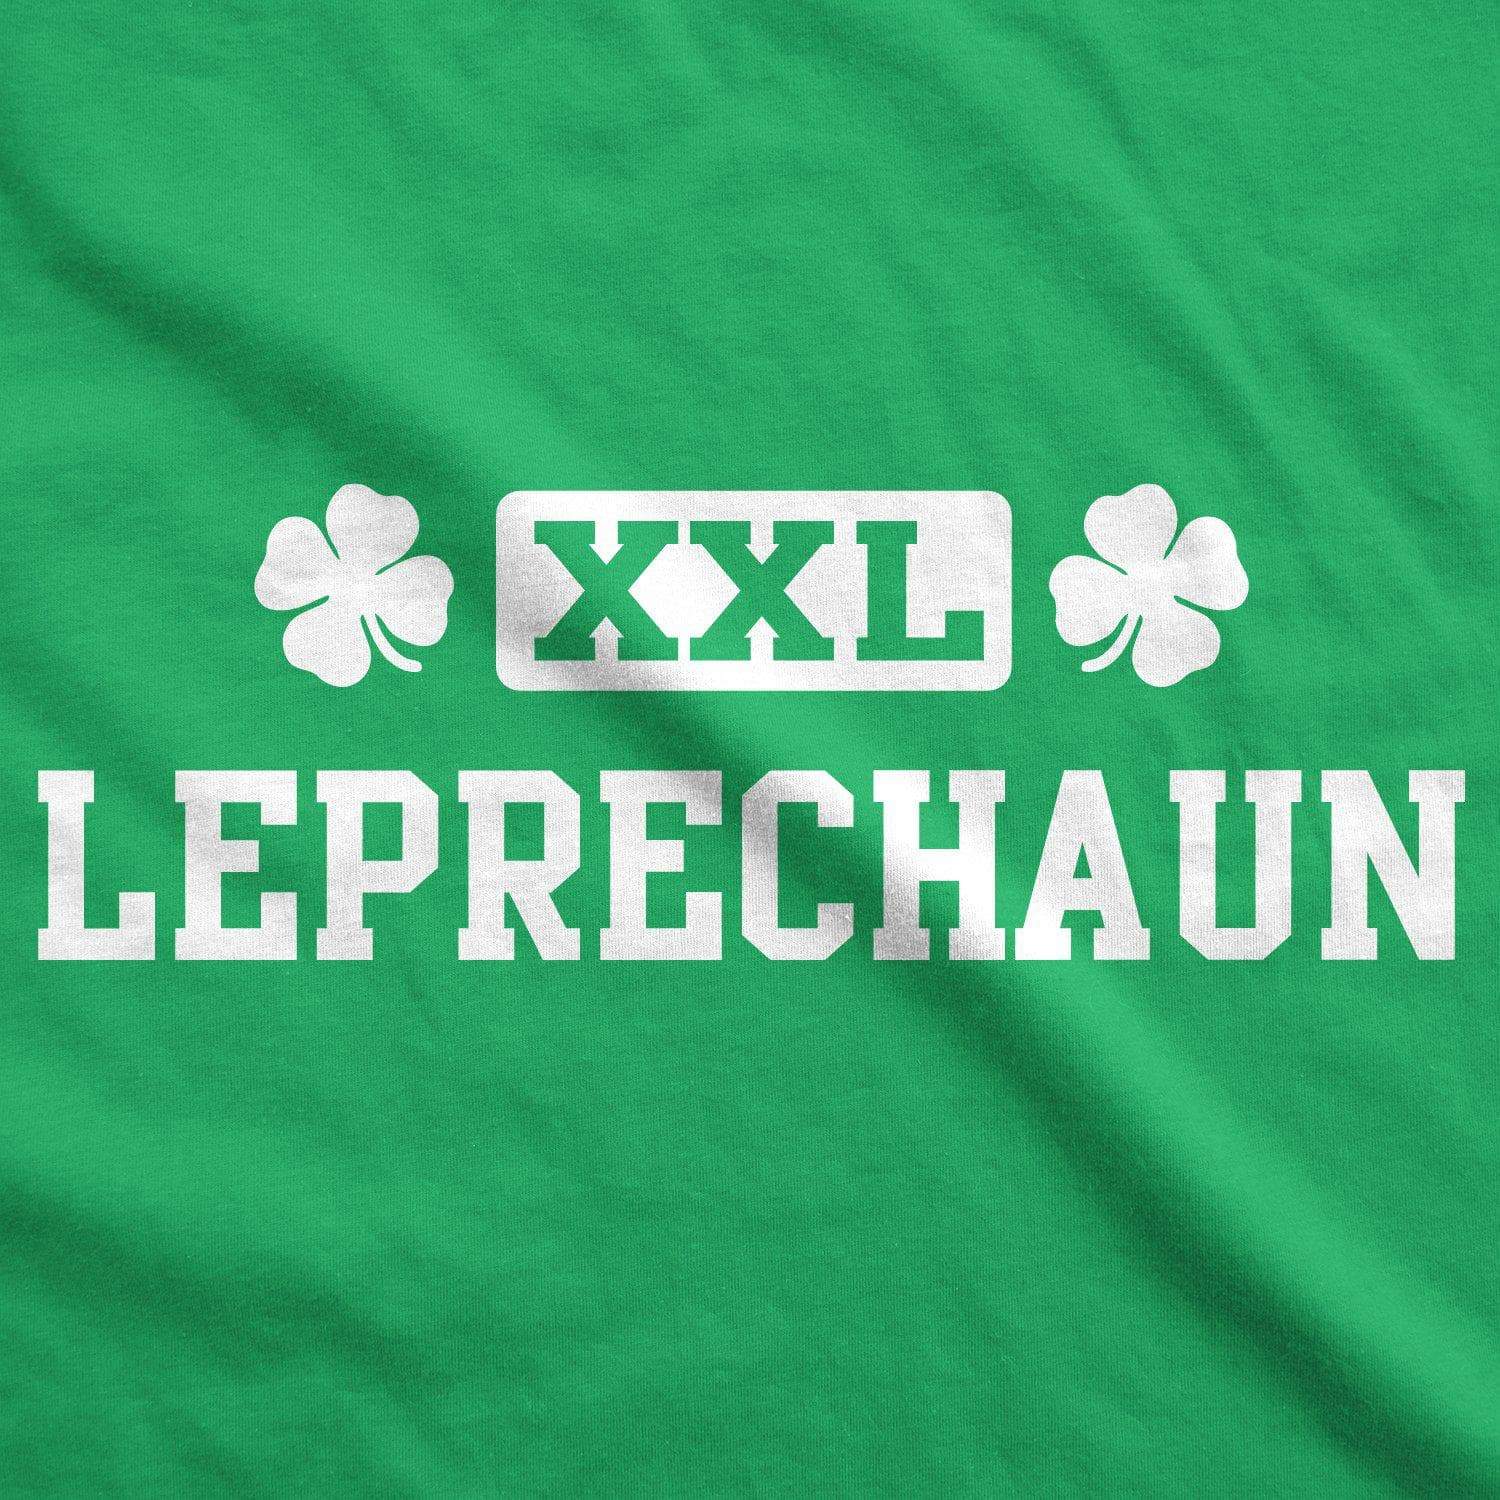 XXL Leprechaun Men's Tshirt  -  Crazy Dog T-Shirts